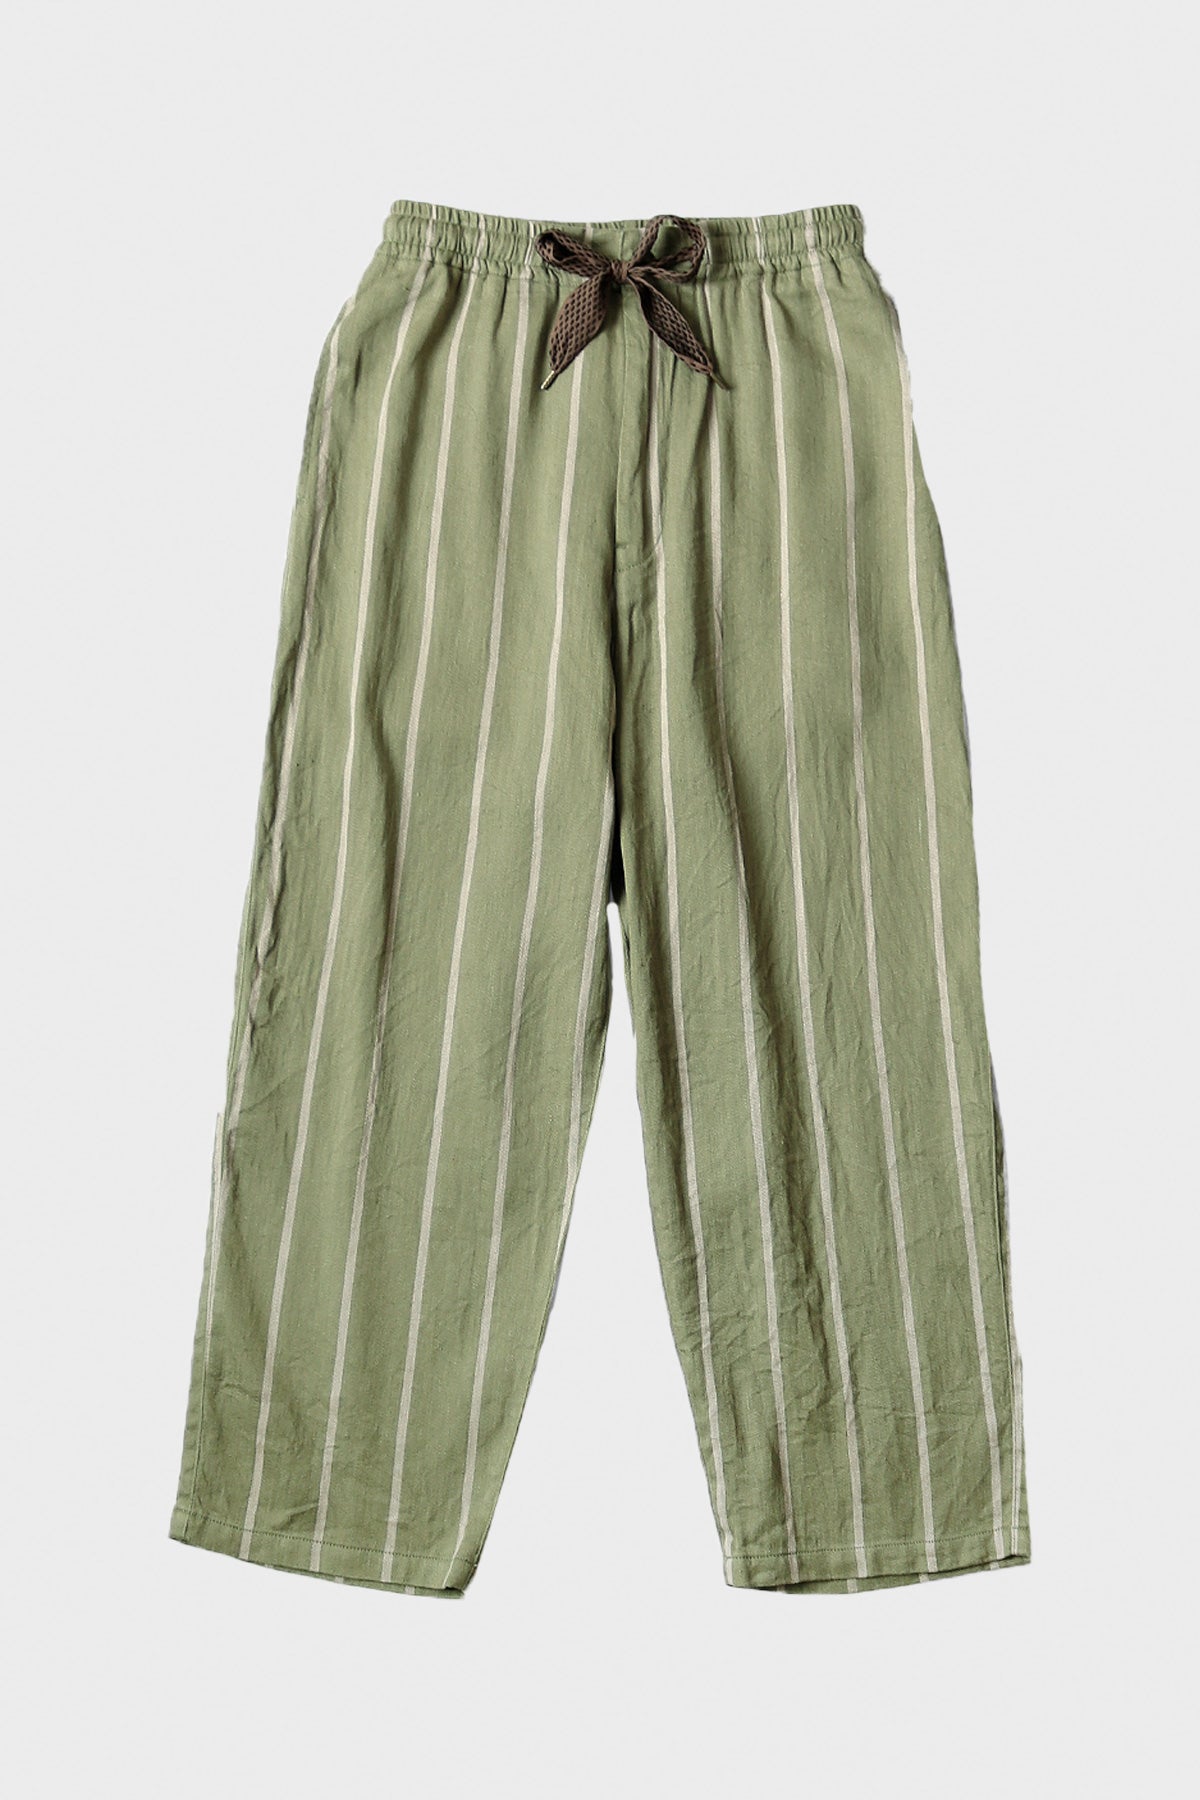 Kapital - Linen PHILLIES Stripe EASY Pants - Khaki - Canoe Club